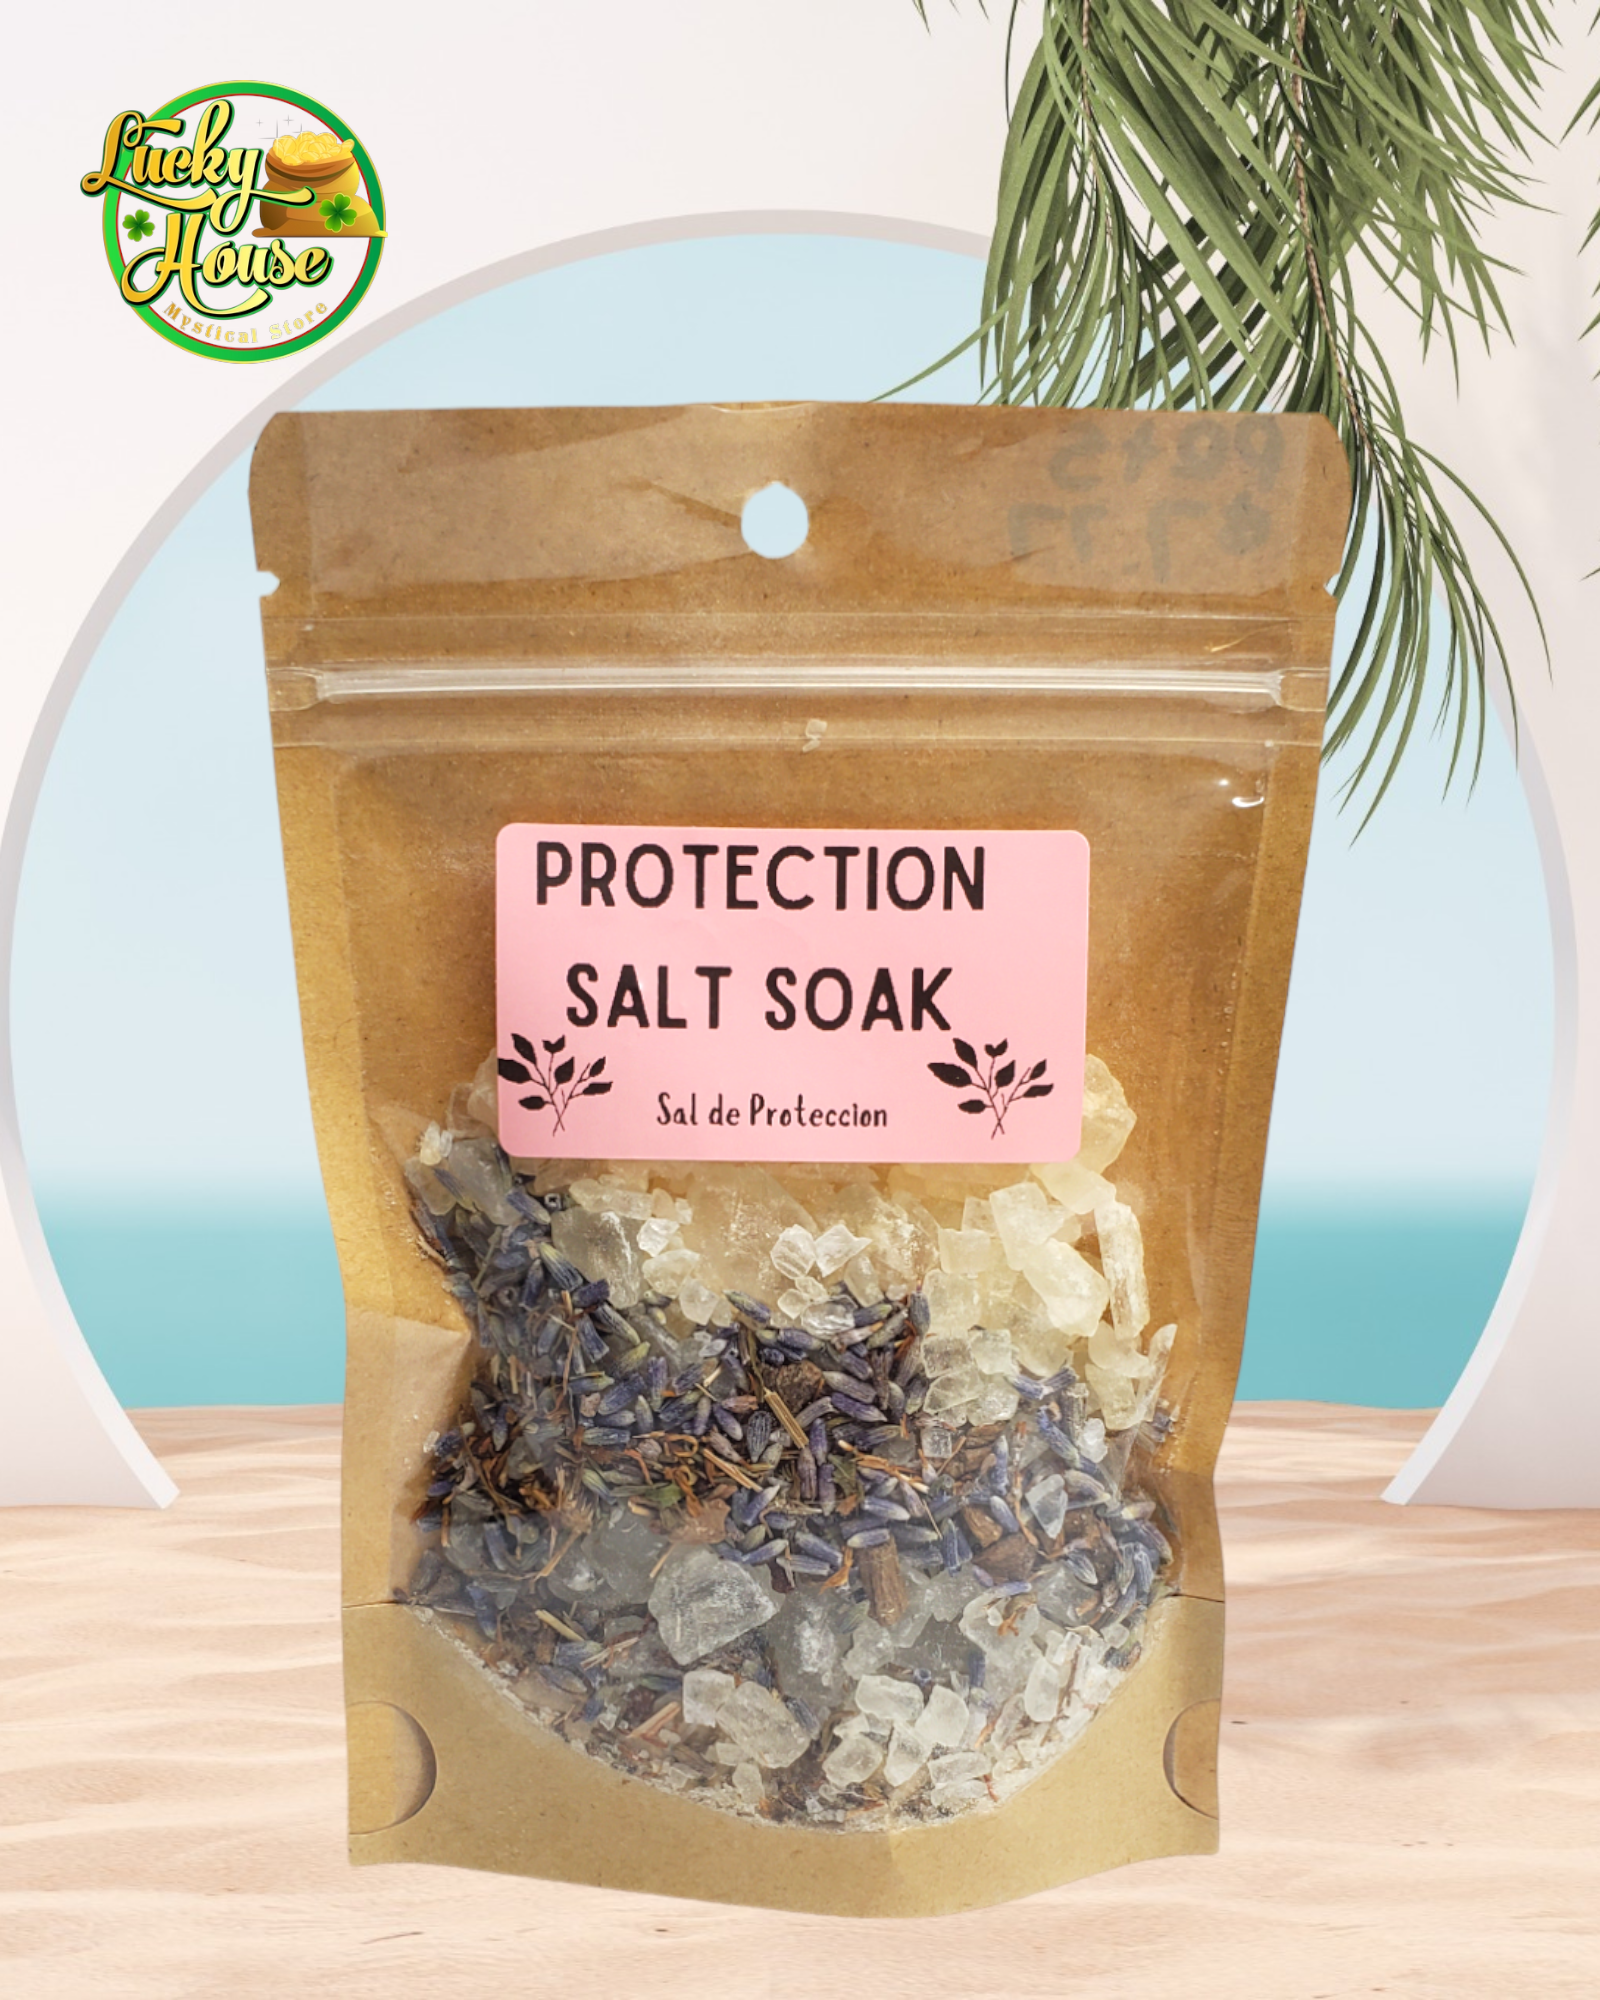 Protection Salt Soak